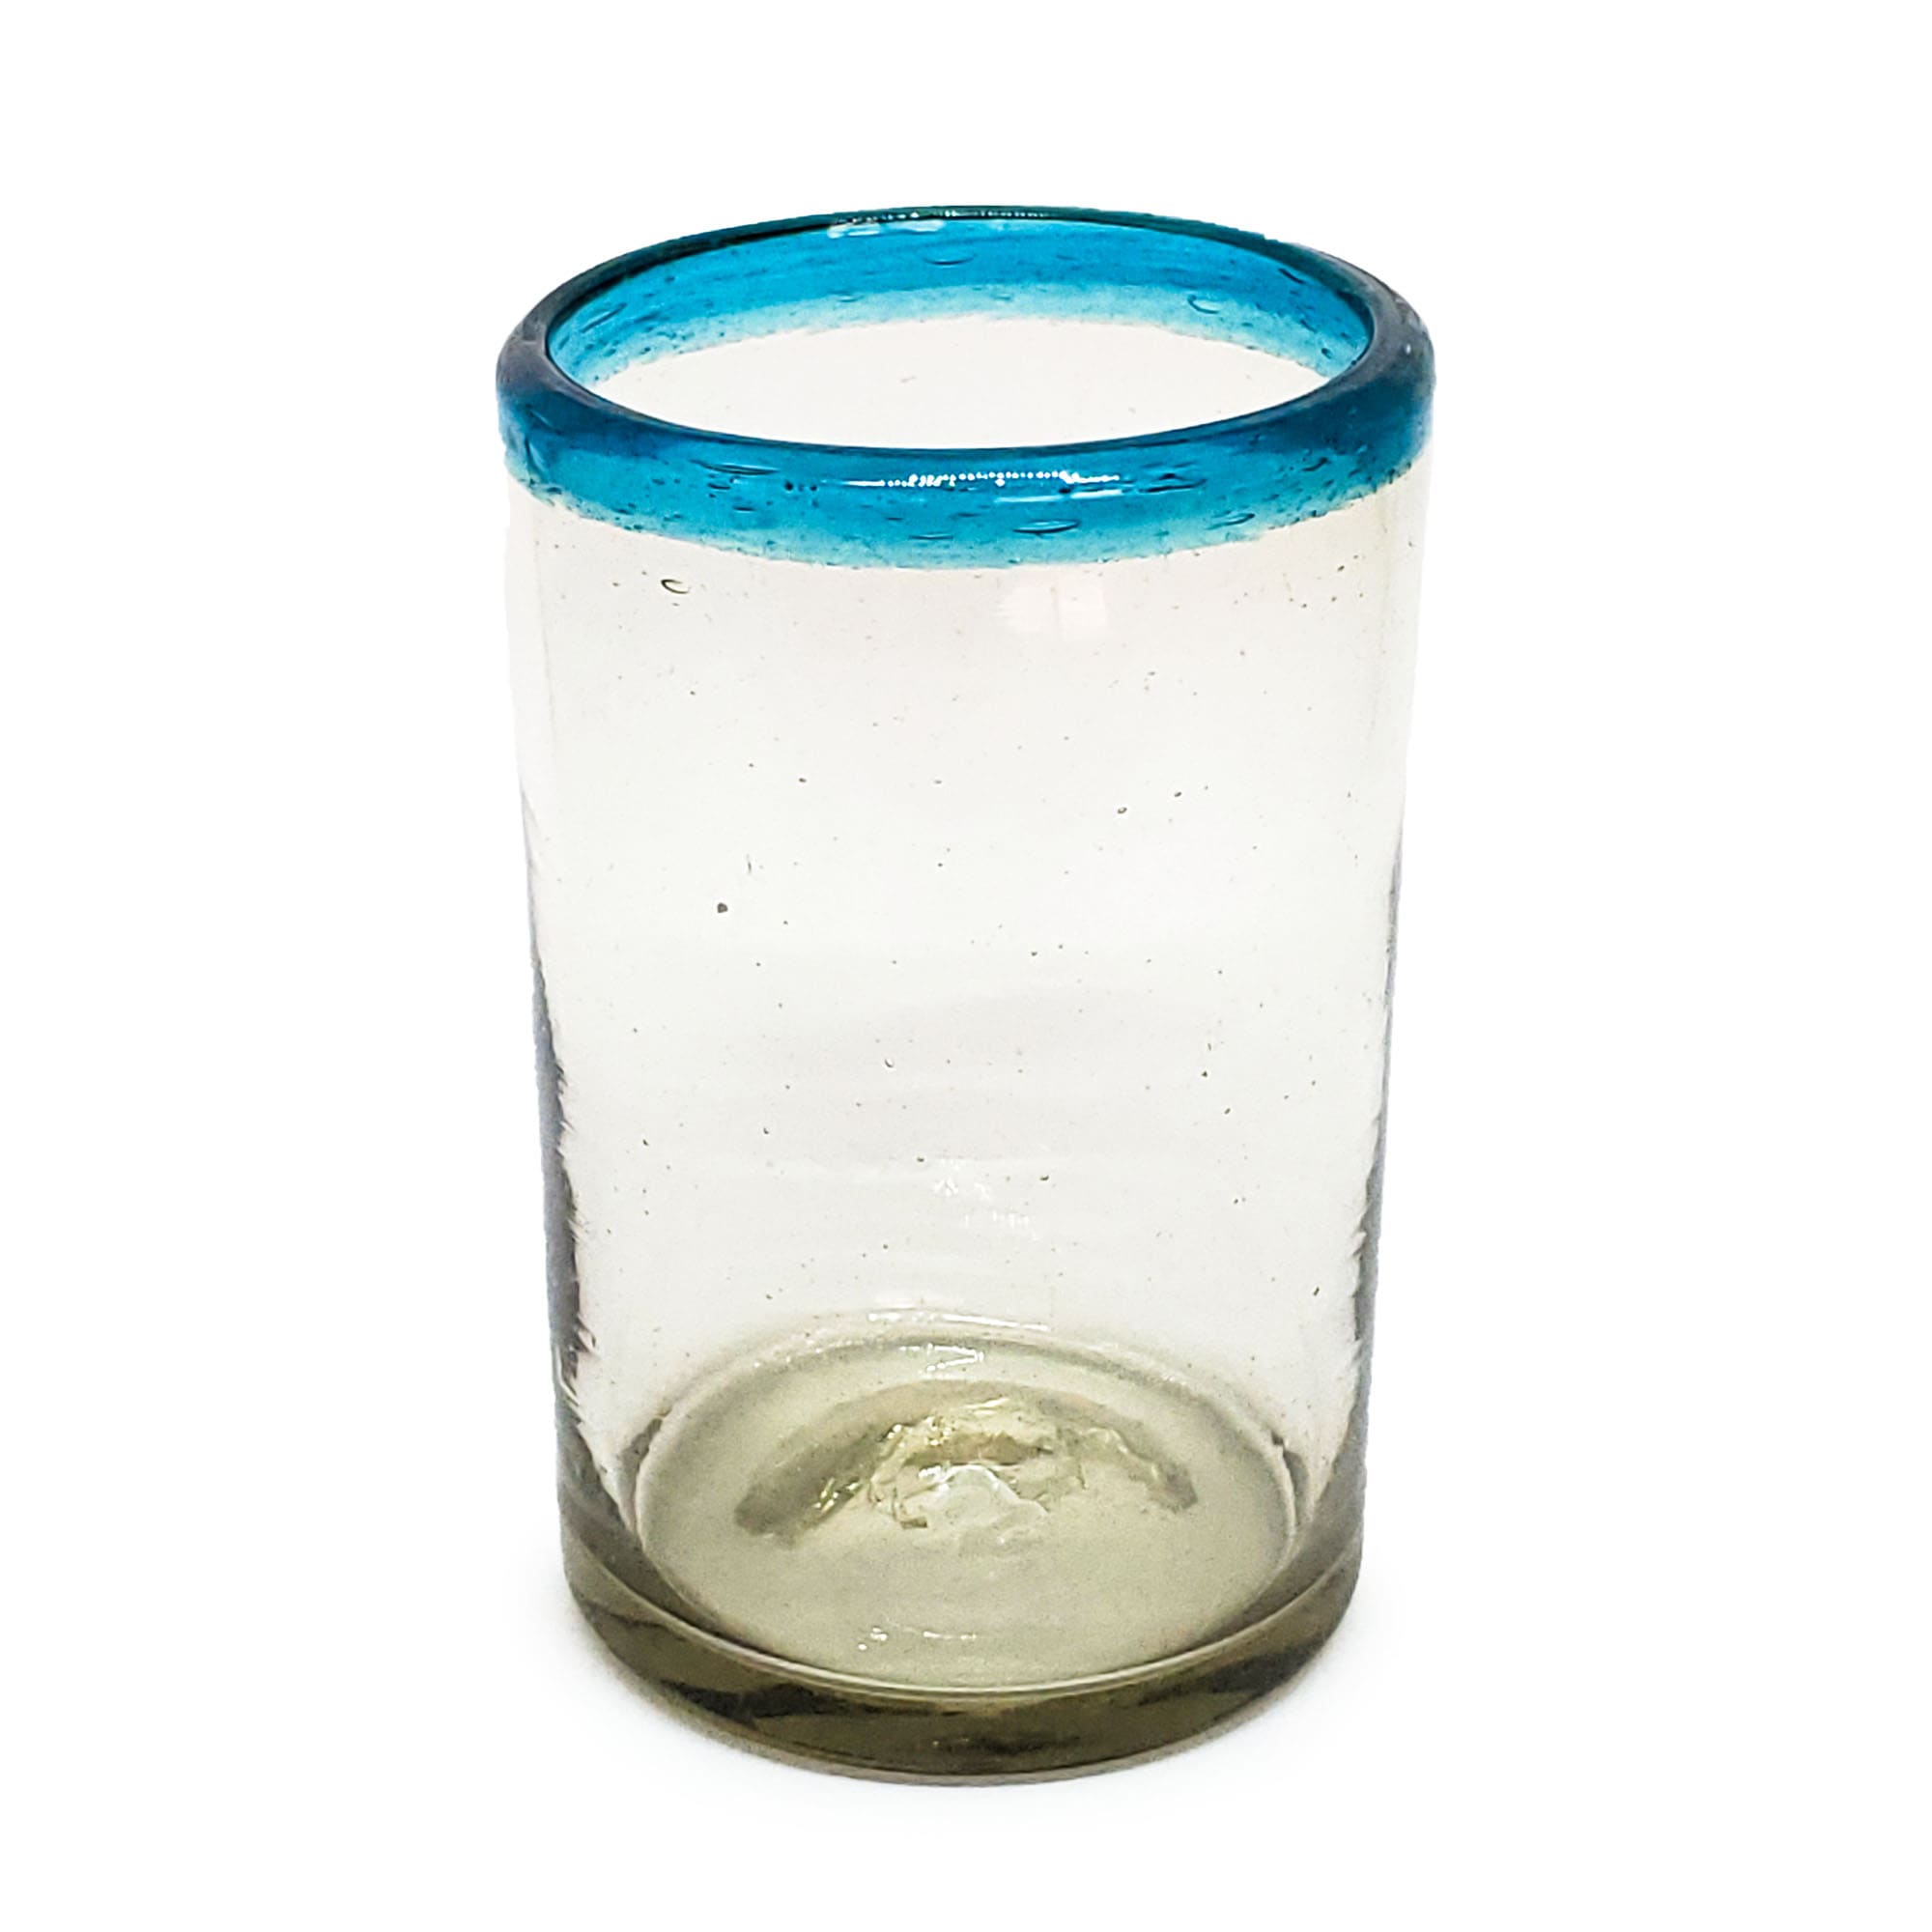 Aqua Blue Rim 14 oz Drinking Glasses (set of 6)